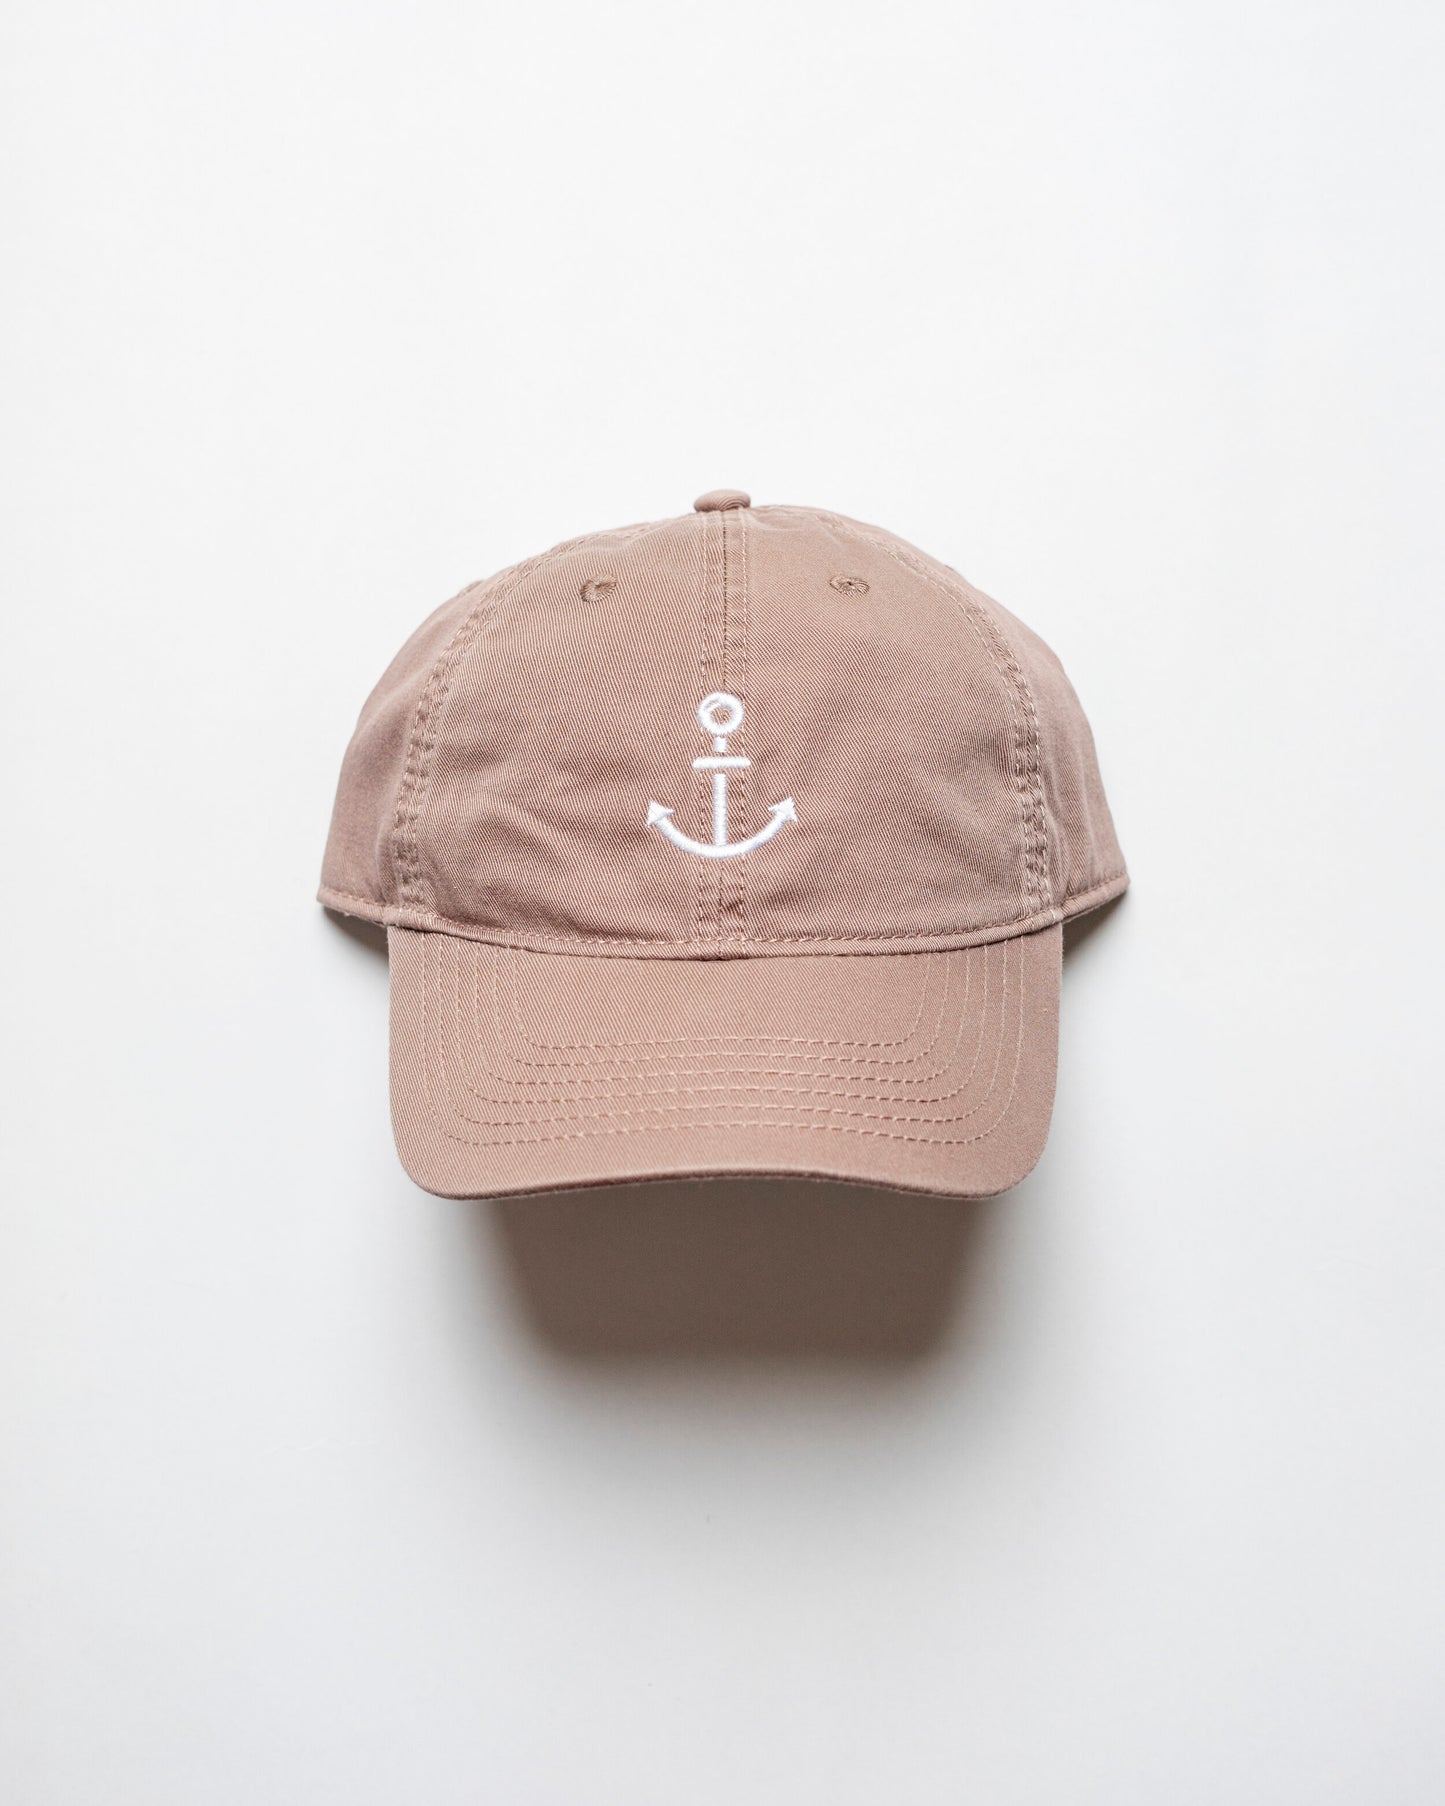 Copps Island Anchor Hat